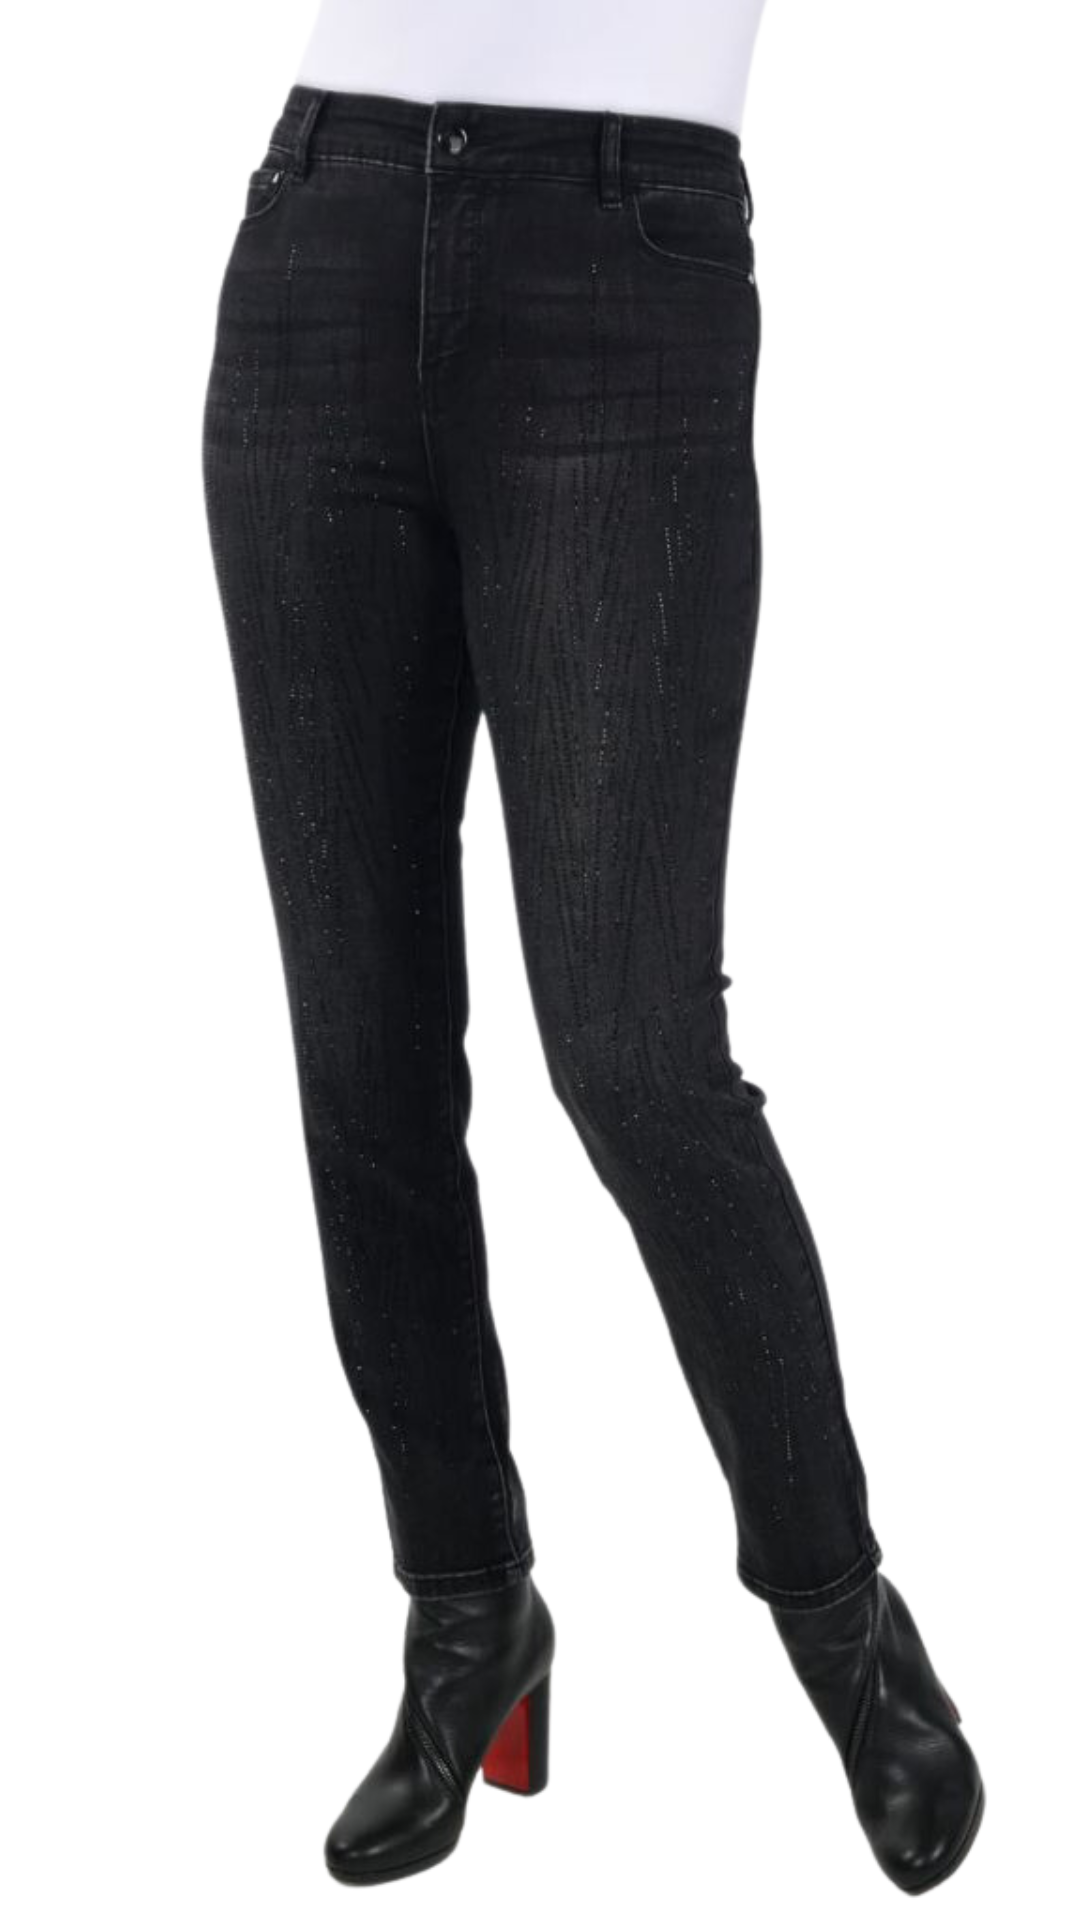 Rhinestone Front Detail Jeans. Style FL233872U